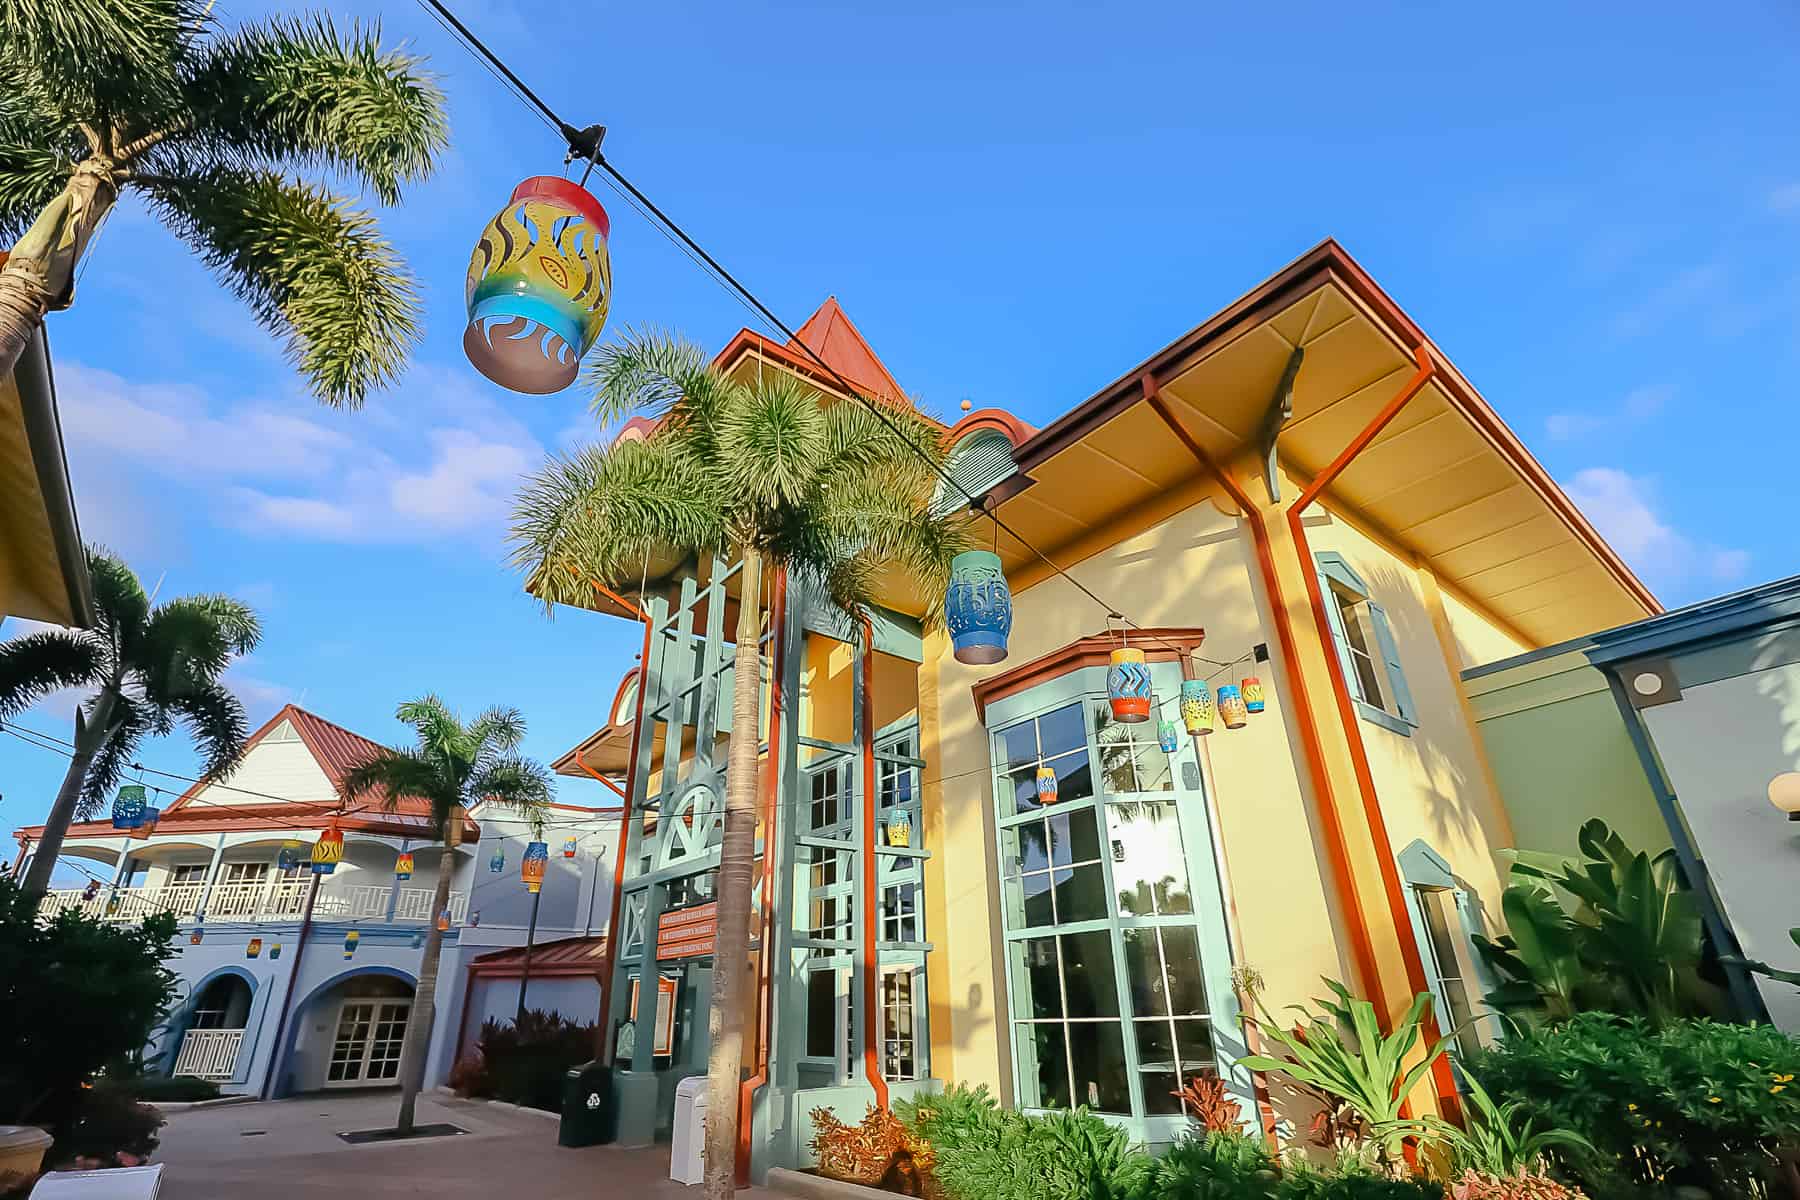 A Resorts Gal Review of Disney’s Caribbean Beach Resort